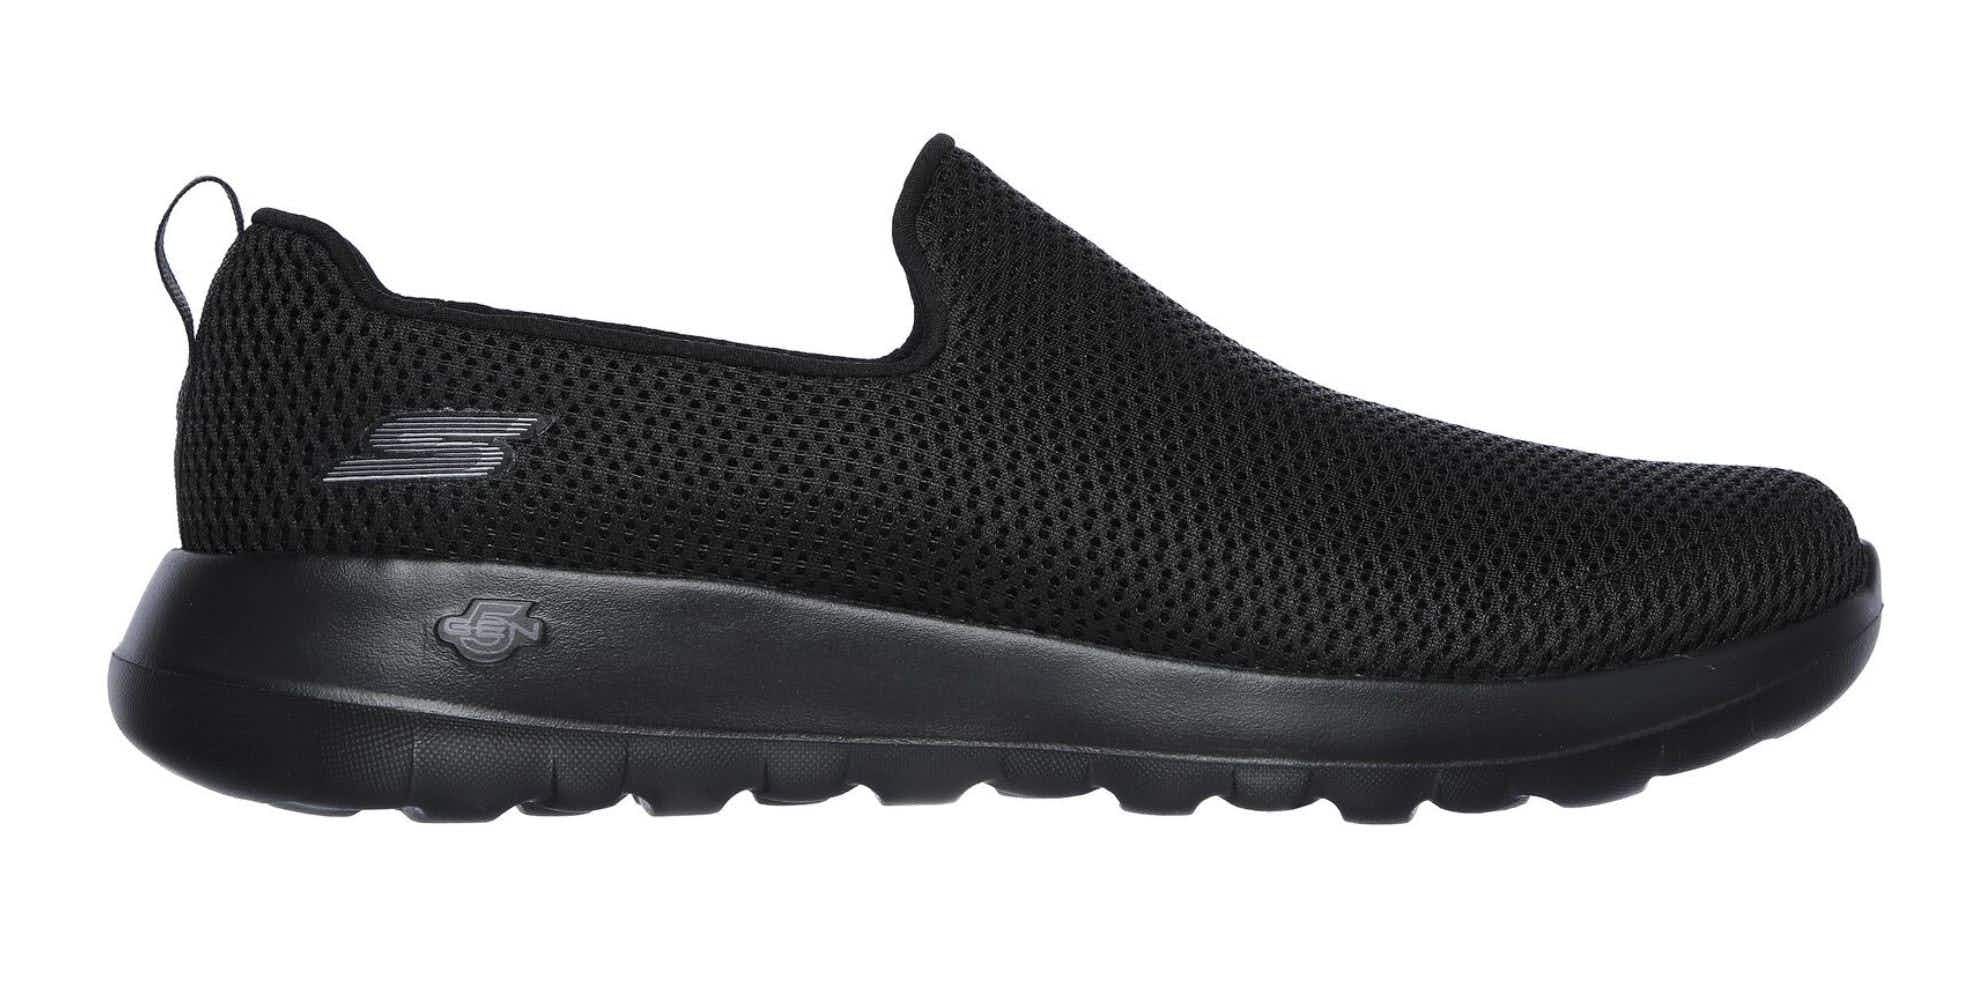 A Skechers GoWalk shoe in the color black.